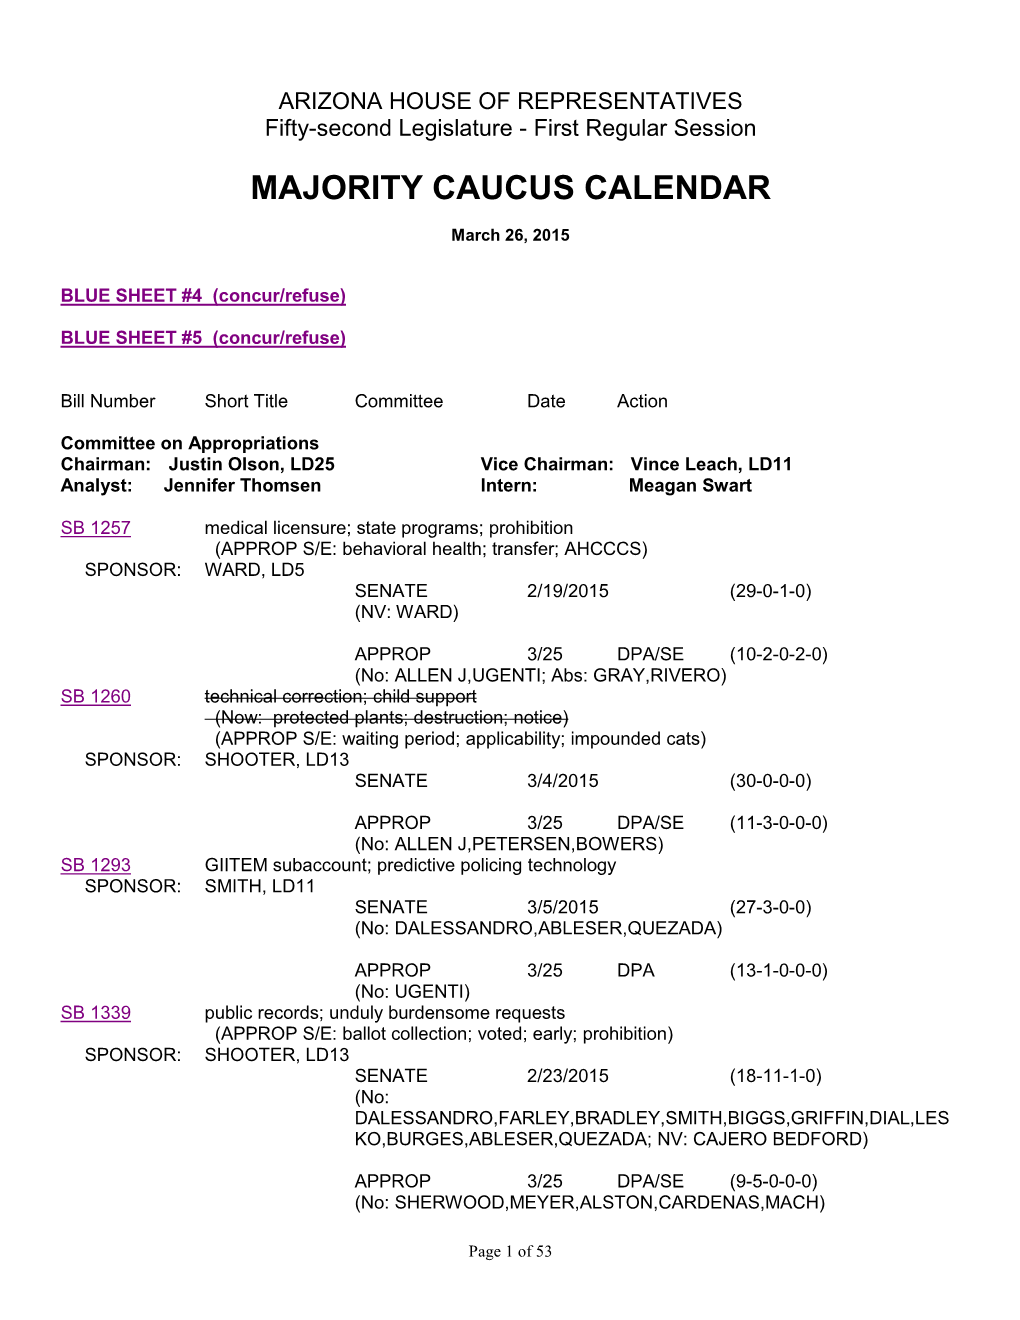 Caucus Calendar